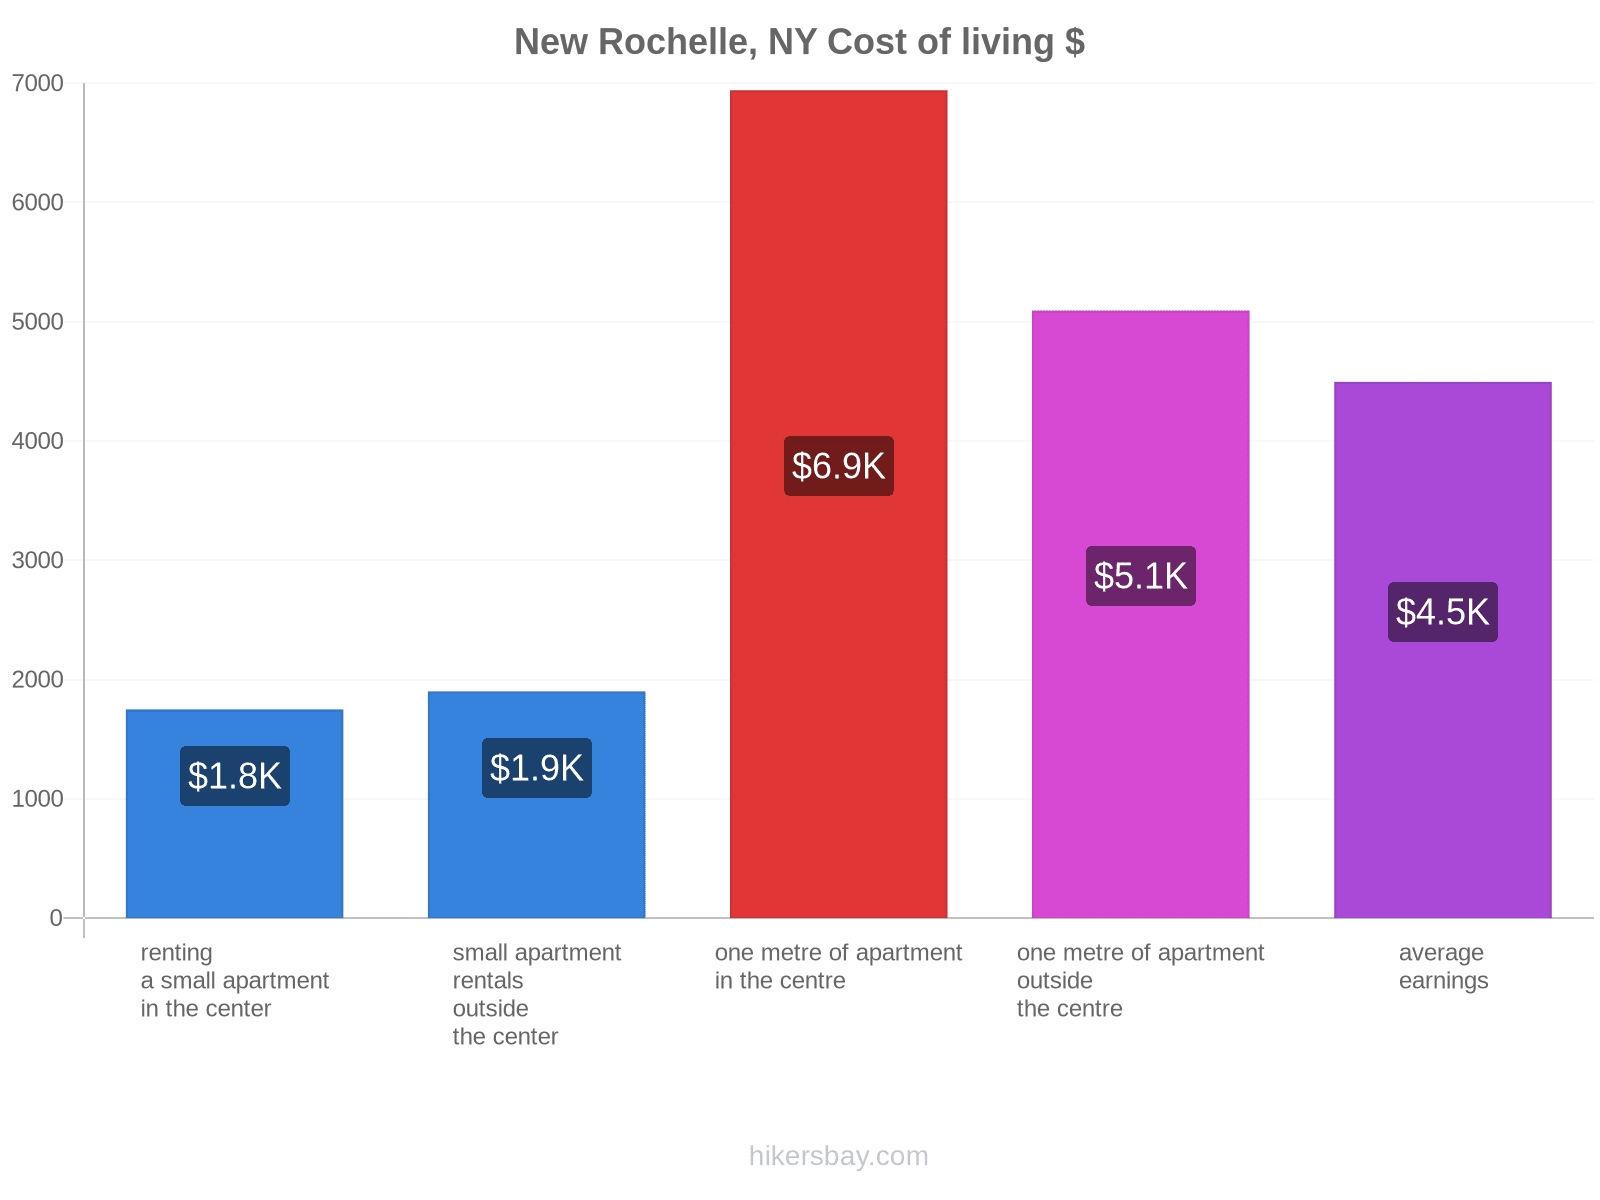 New Rochelle, NY cost of living hikersbay.com